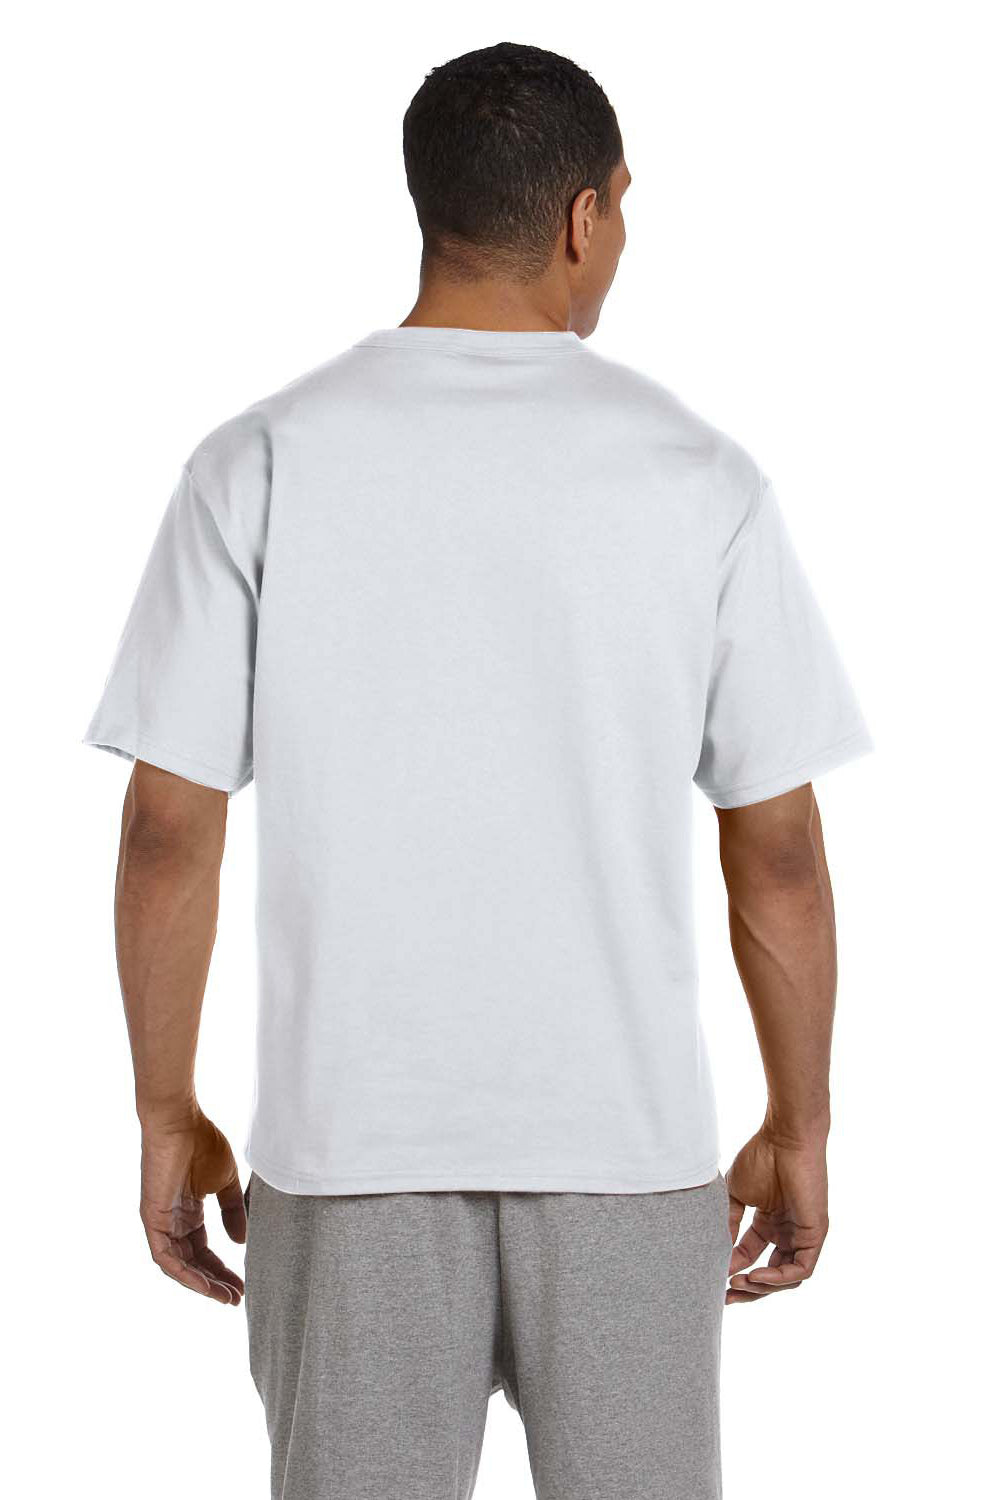 Champion T2102 Mens Heritage Short Sleeve Crewneck T-Shirt Silver Grey Back